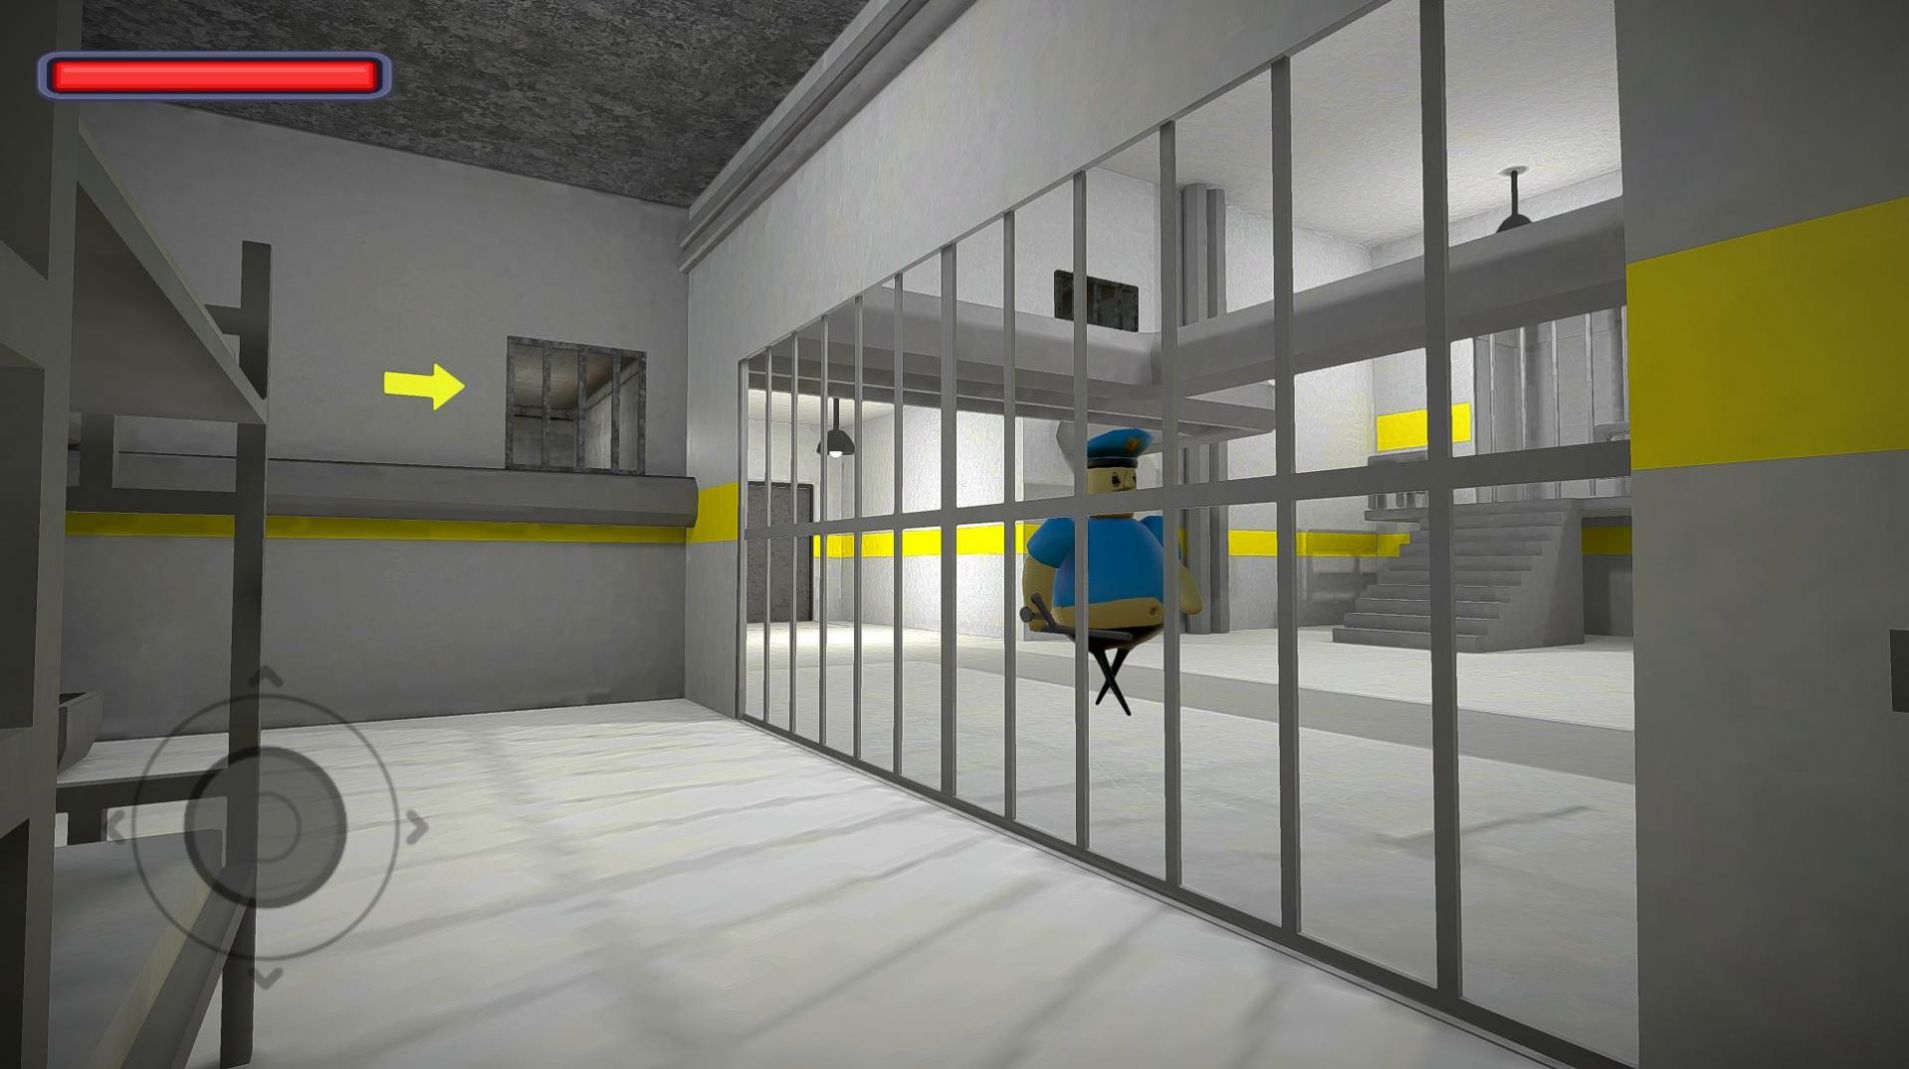 Obby Prison Run游戏中文手机版图片1